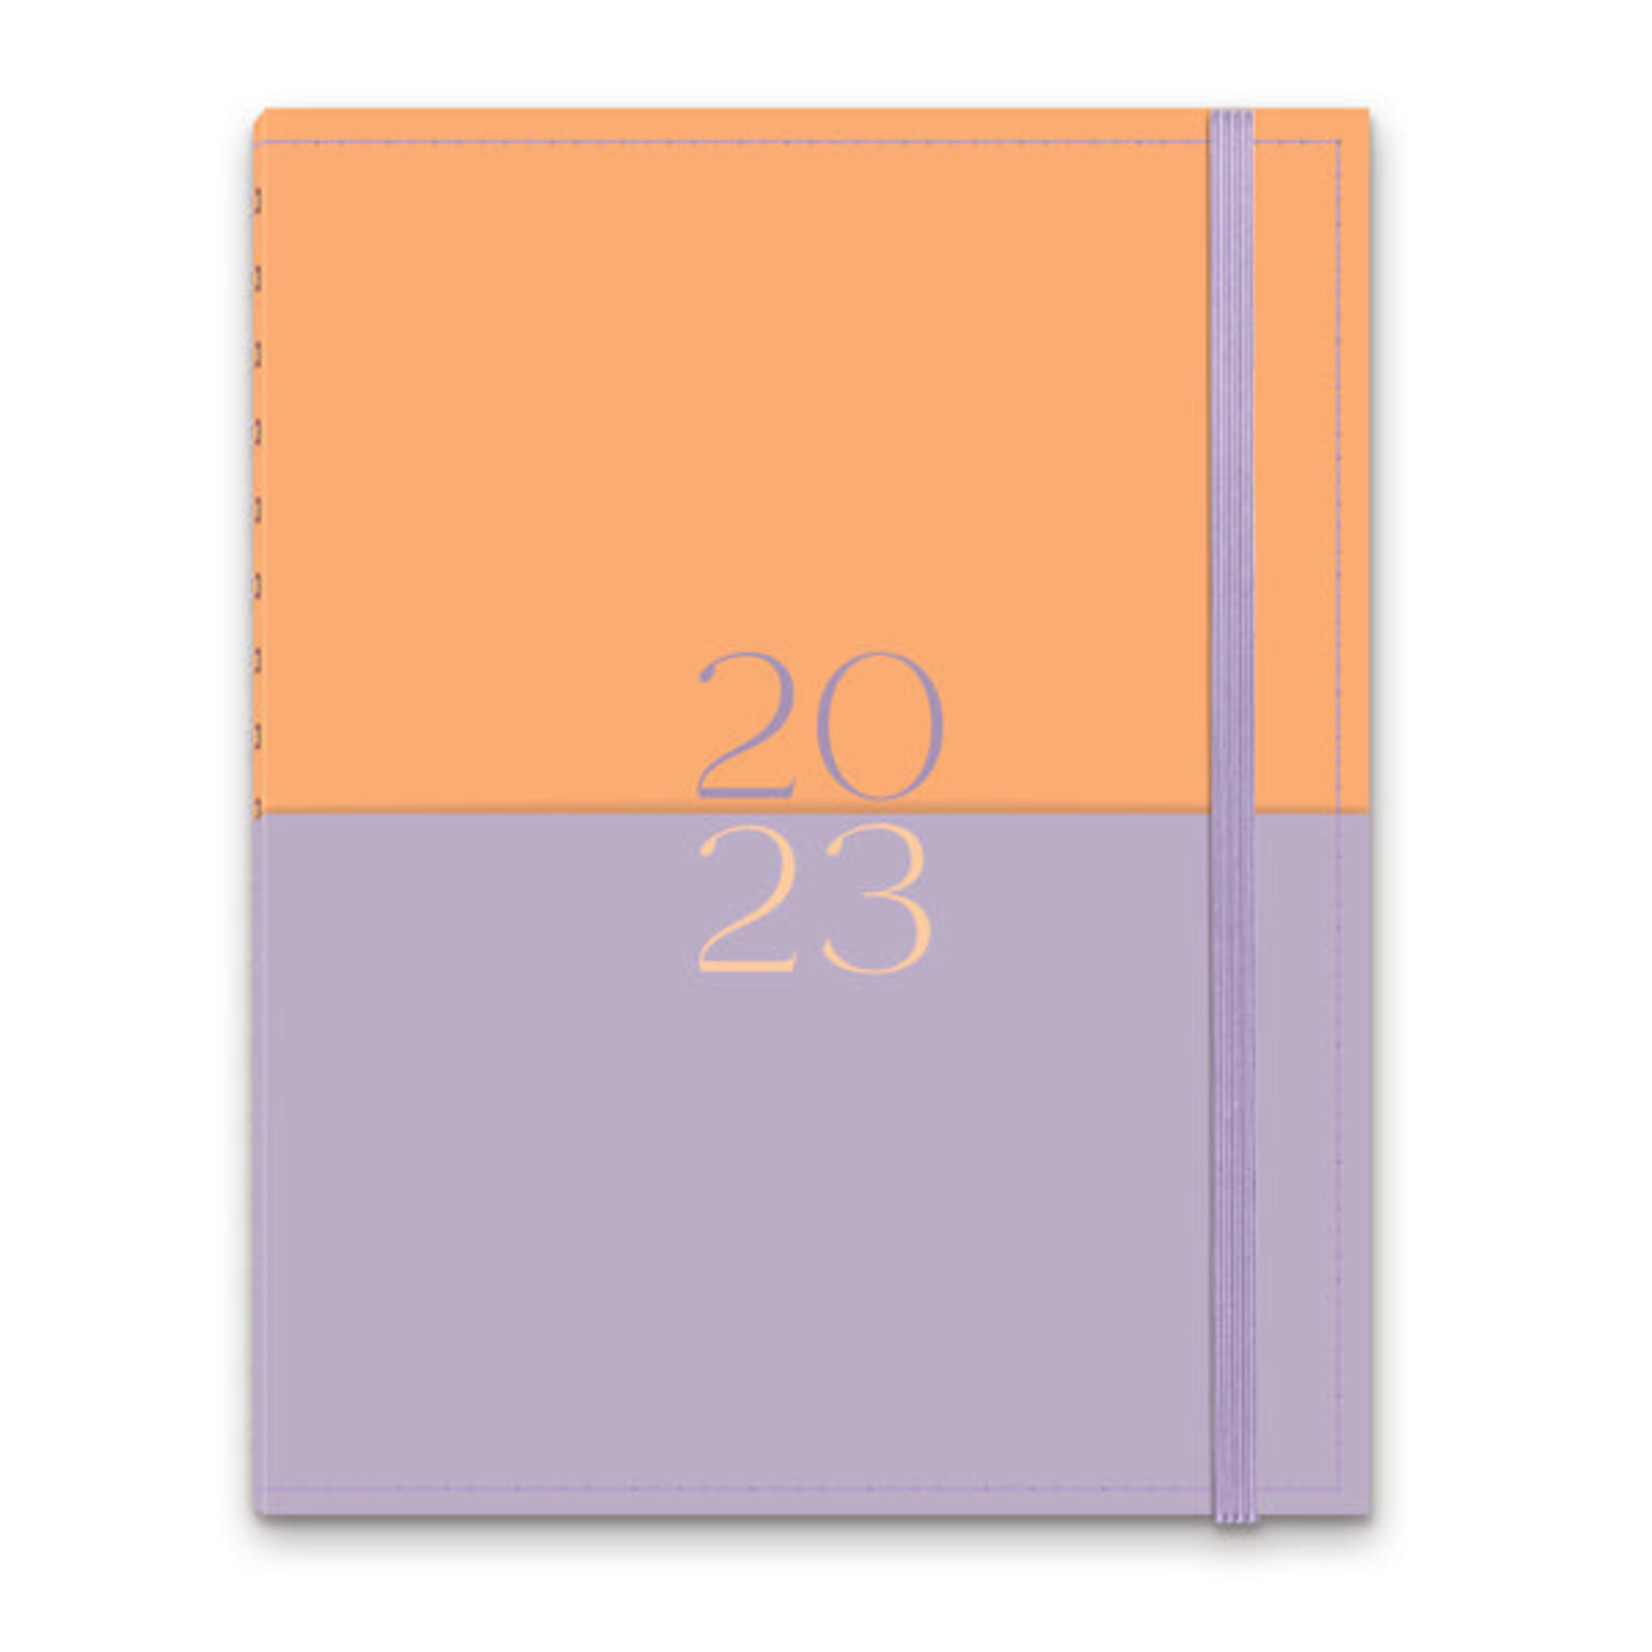 2023 Real-Time Planner in Orange & Lavender